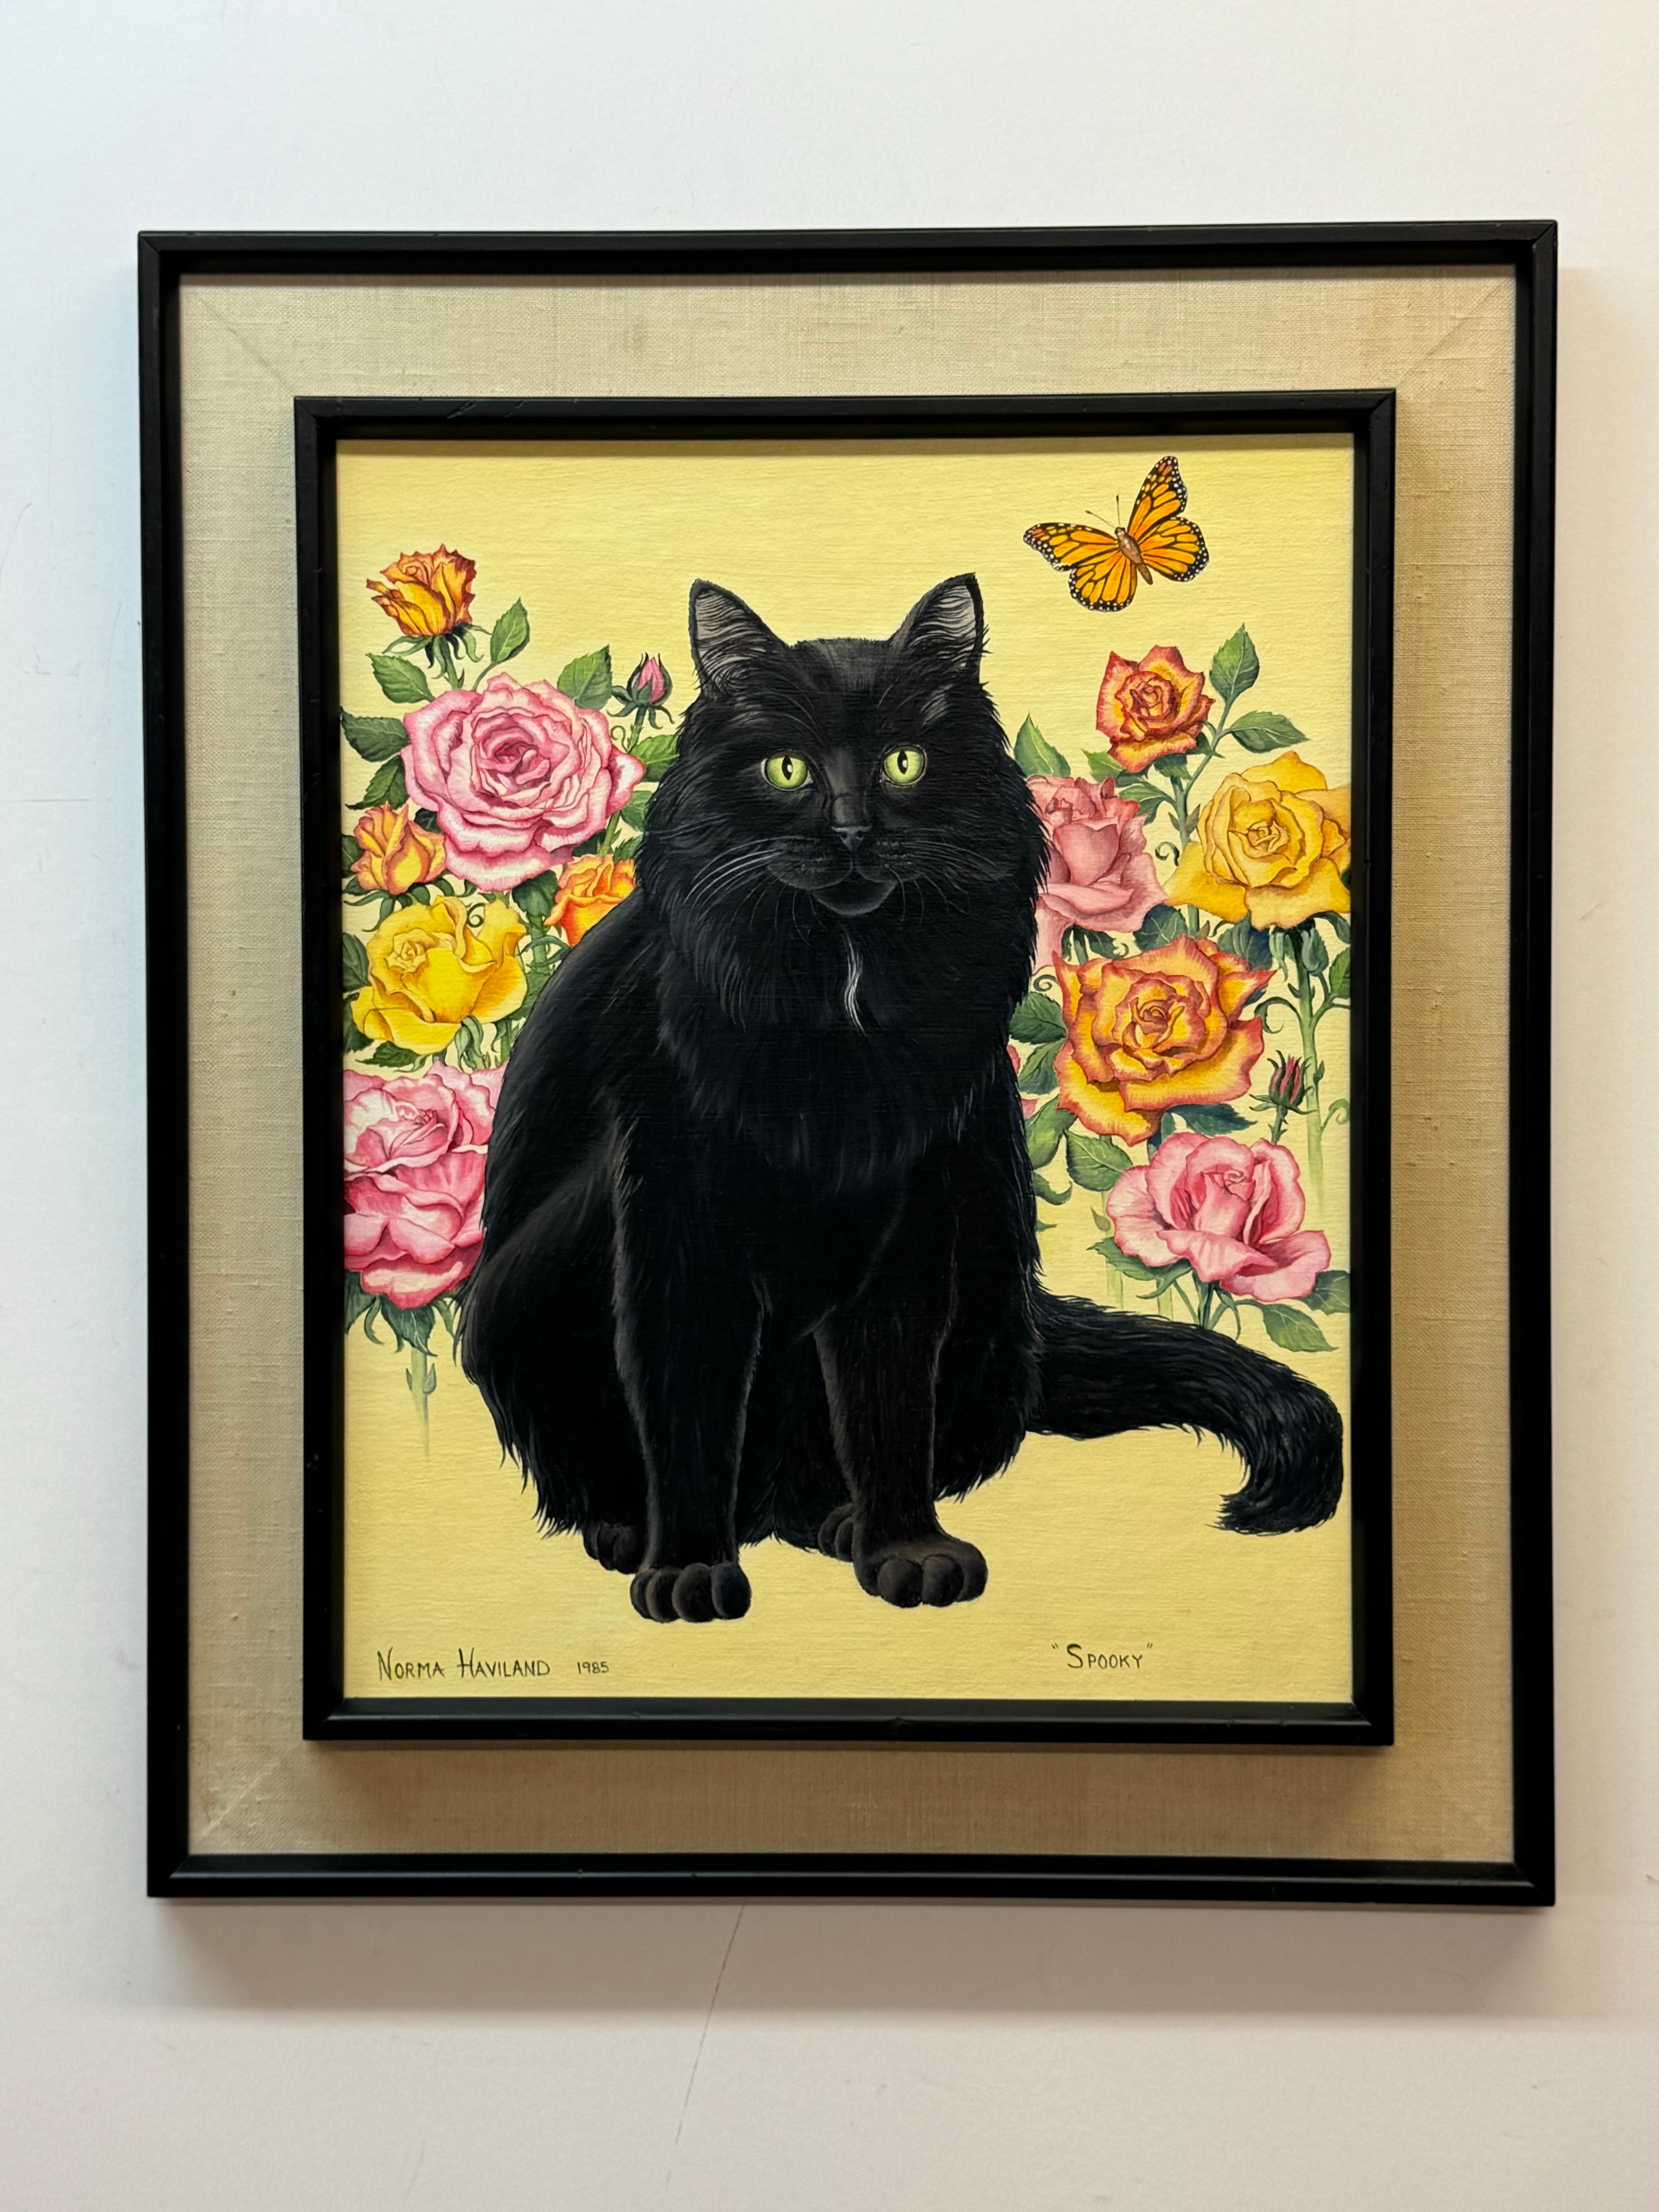 Norma Haviland  Animal Painting - "Spooky" Black cat illustration painted by Walt Disney Studios artist